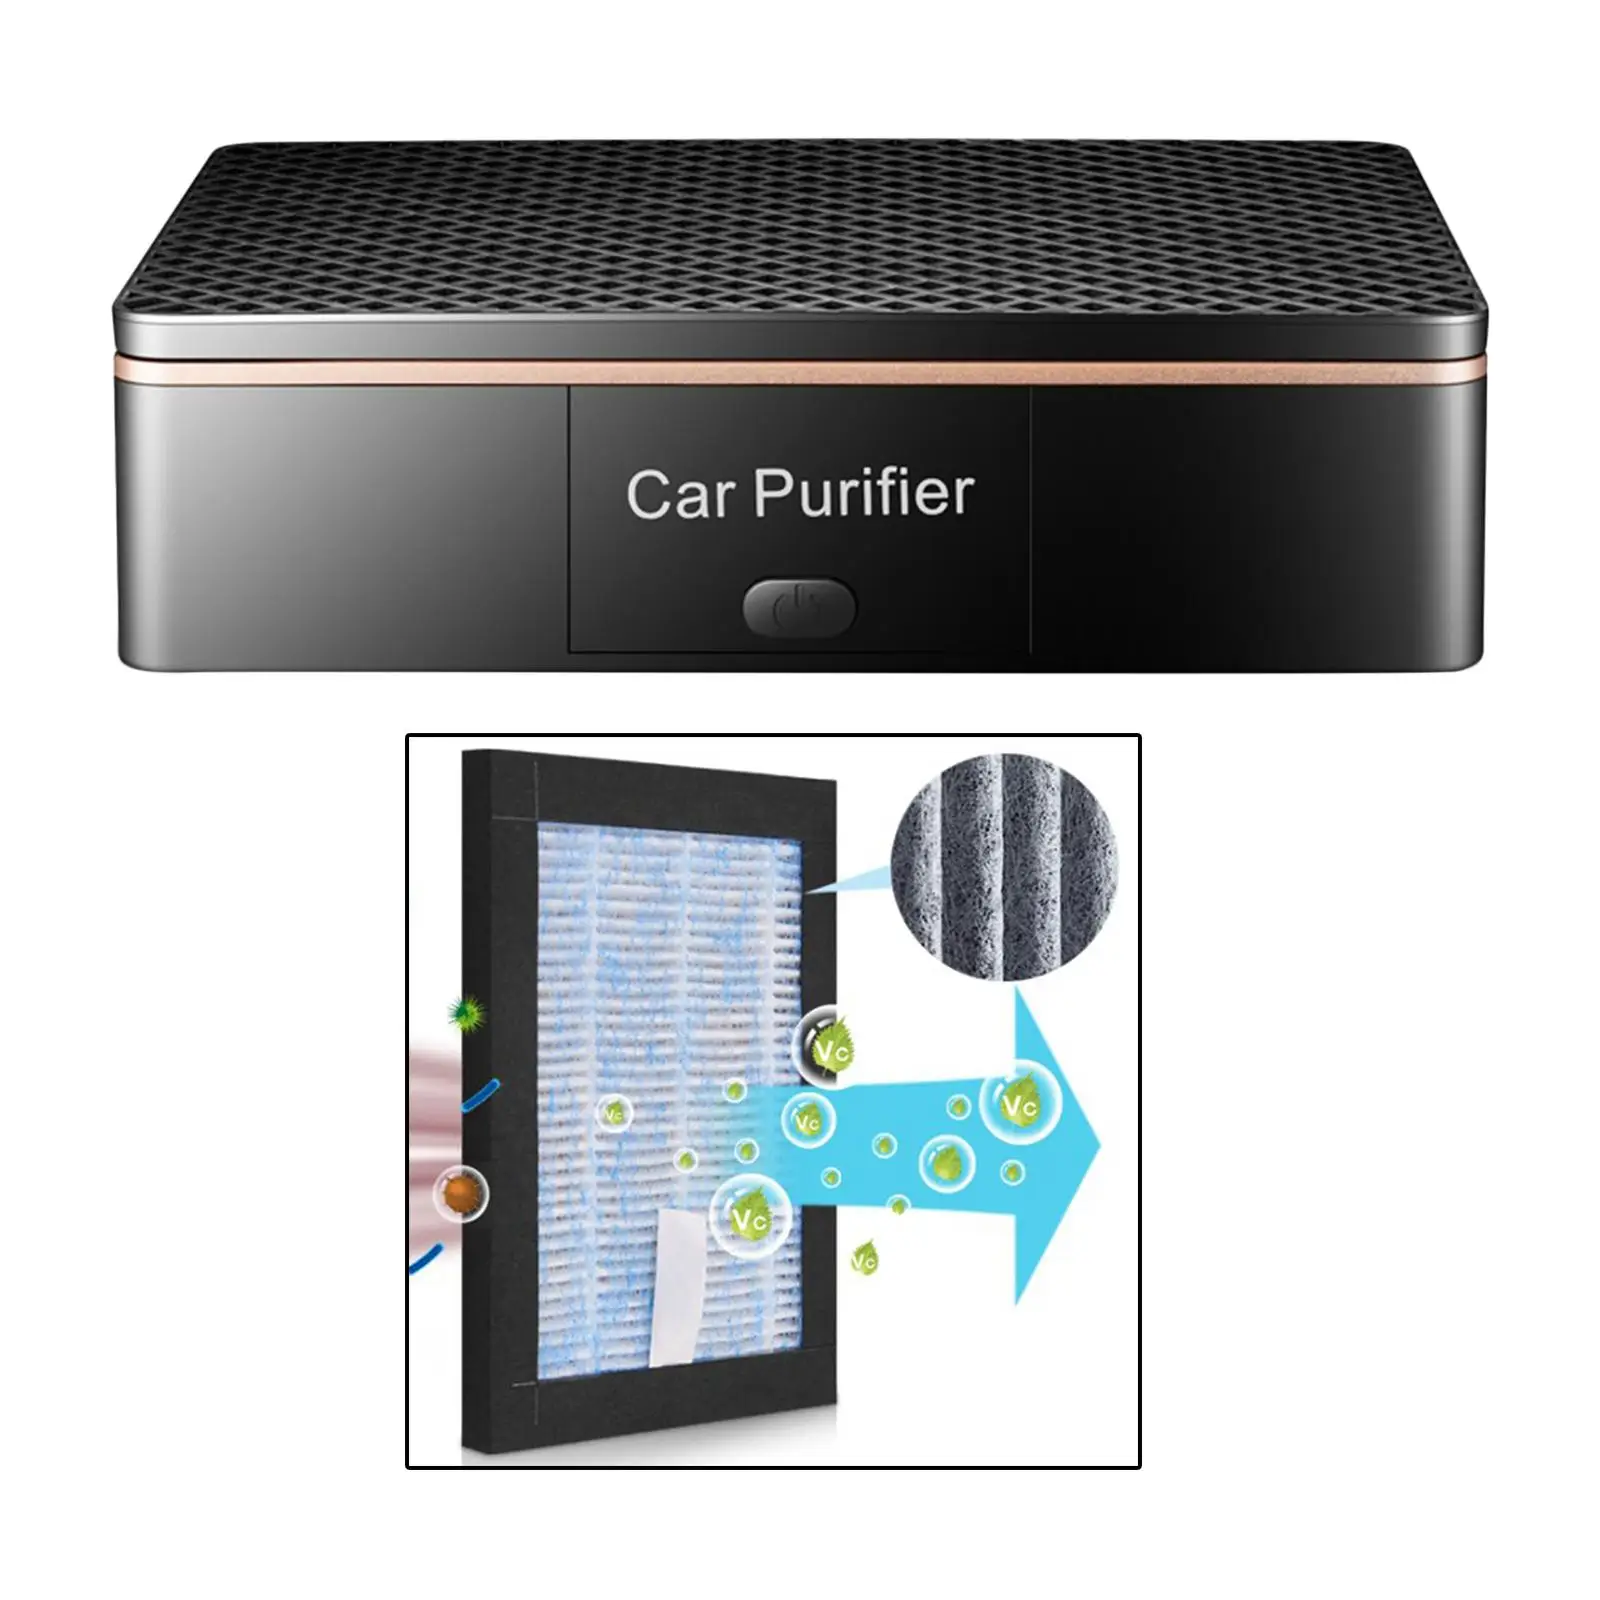 Car Air Purifier Air Cleaner Deodorizer Ionizer for Home Office 180x128x48mm